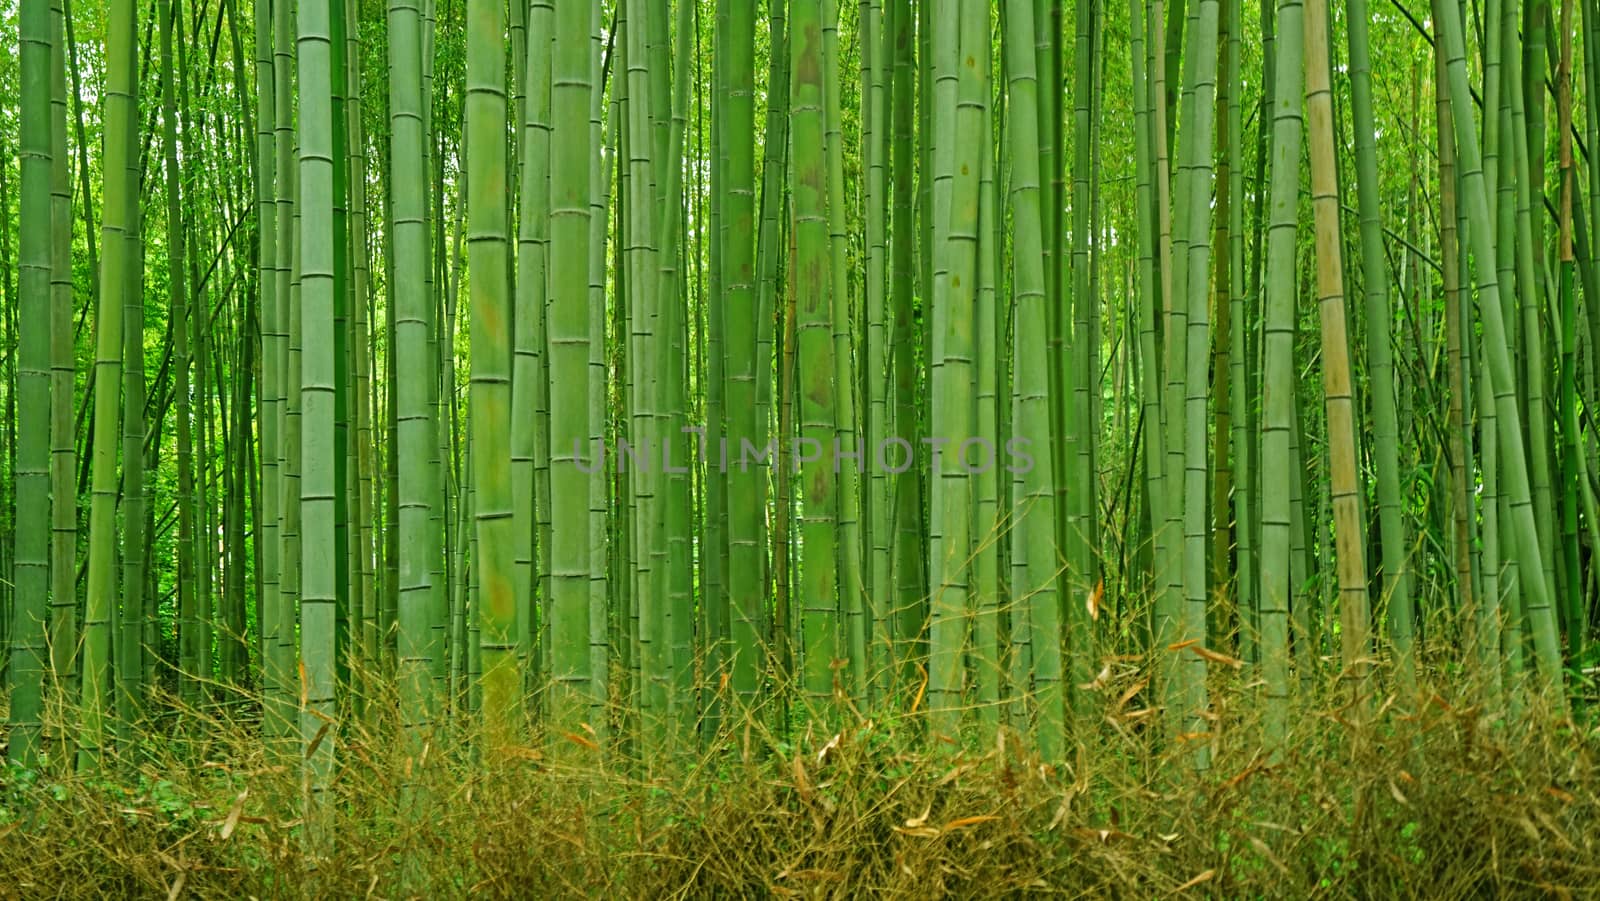 The green bamboo plant forest in Japan zen garden